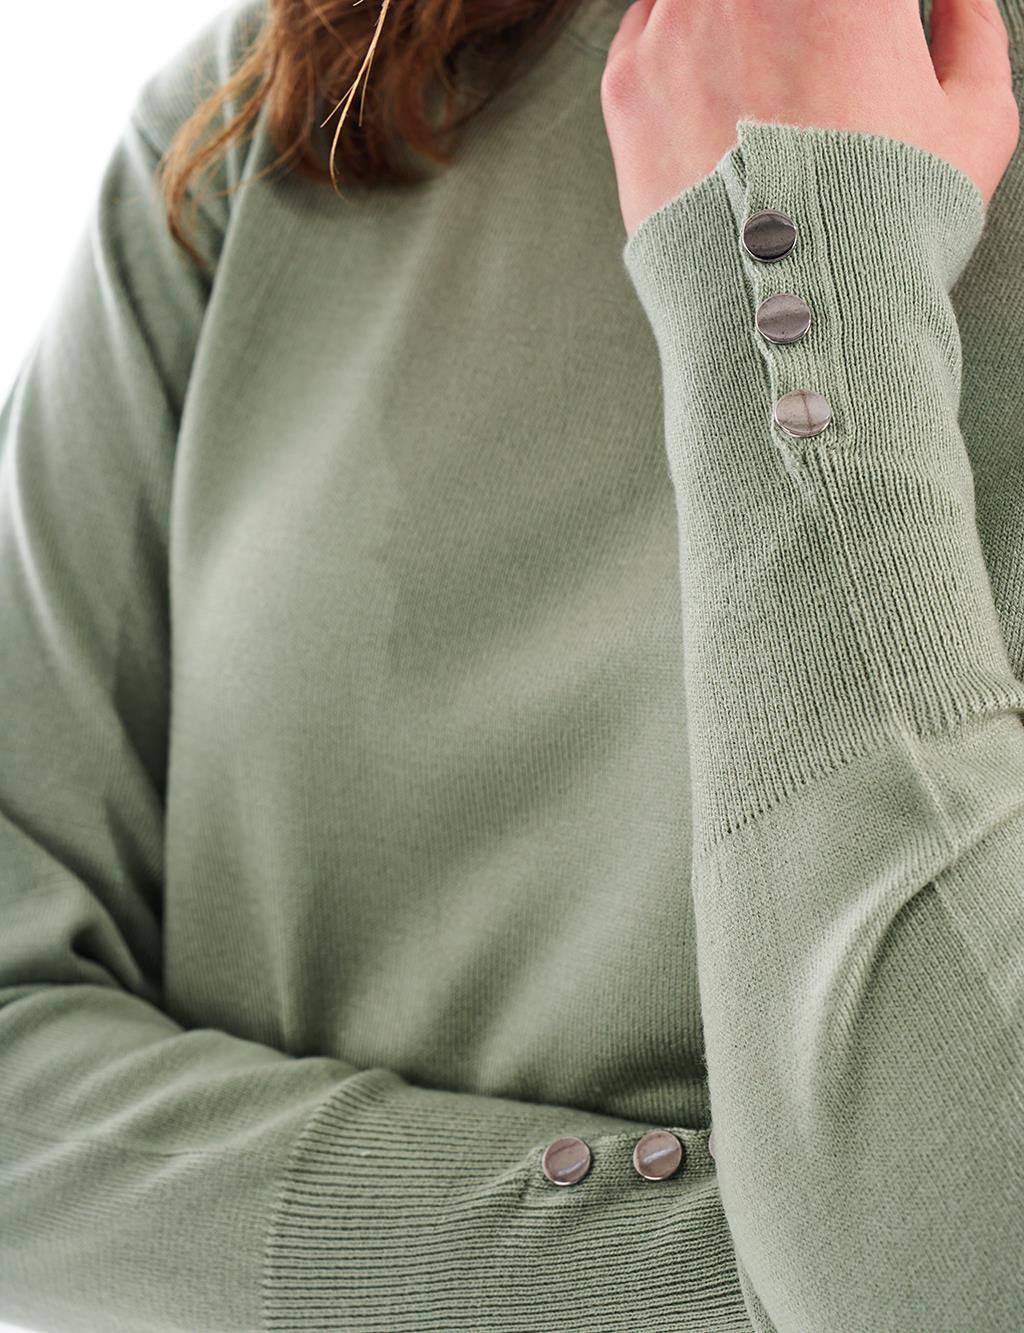 Turtleneck Basic Knitwear Tunic Moss Green